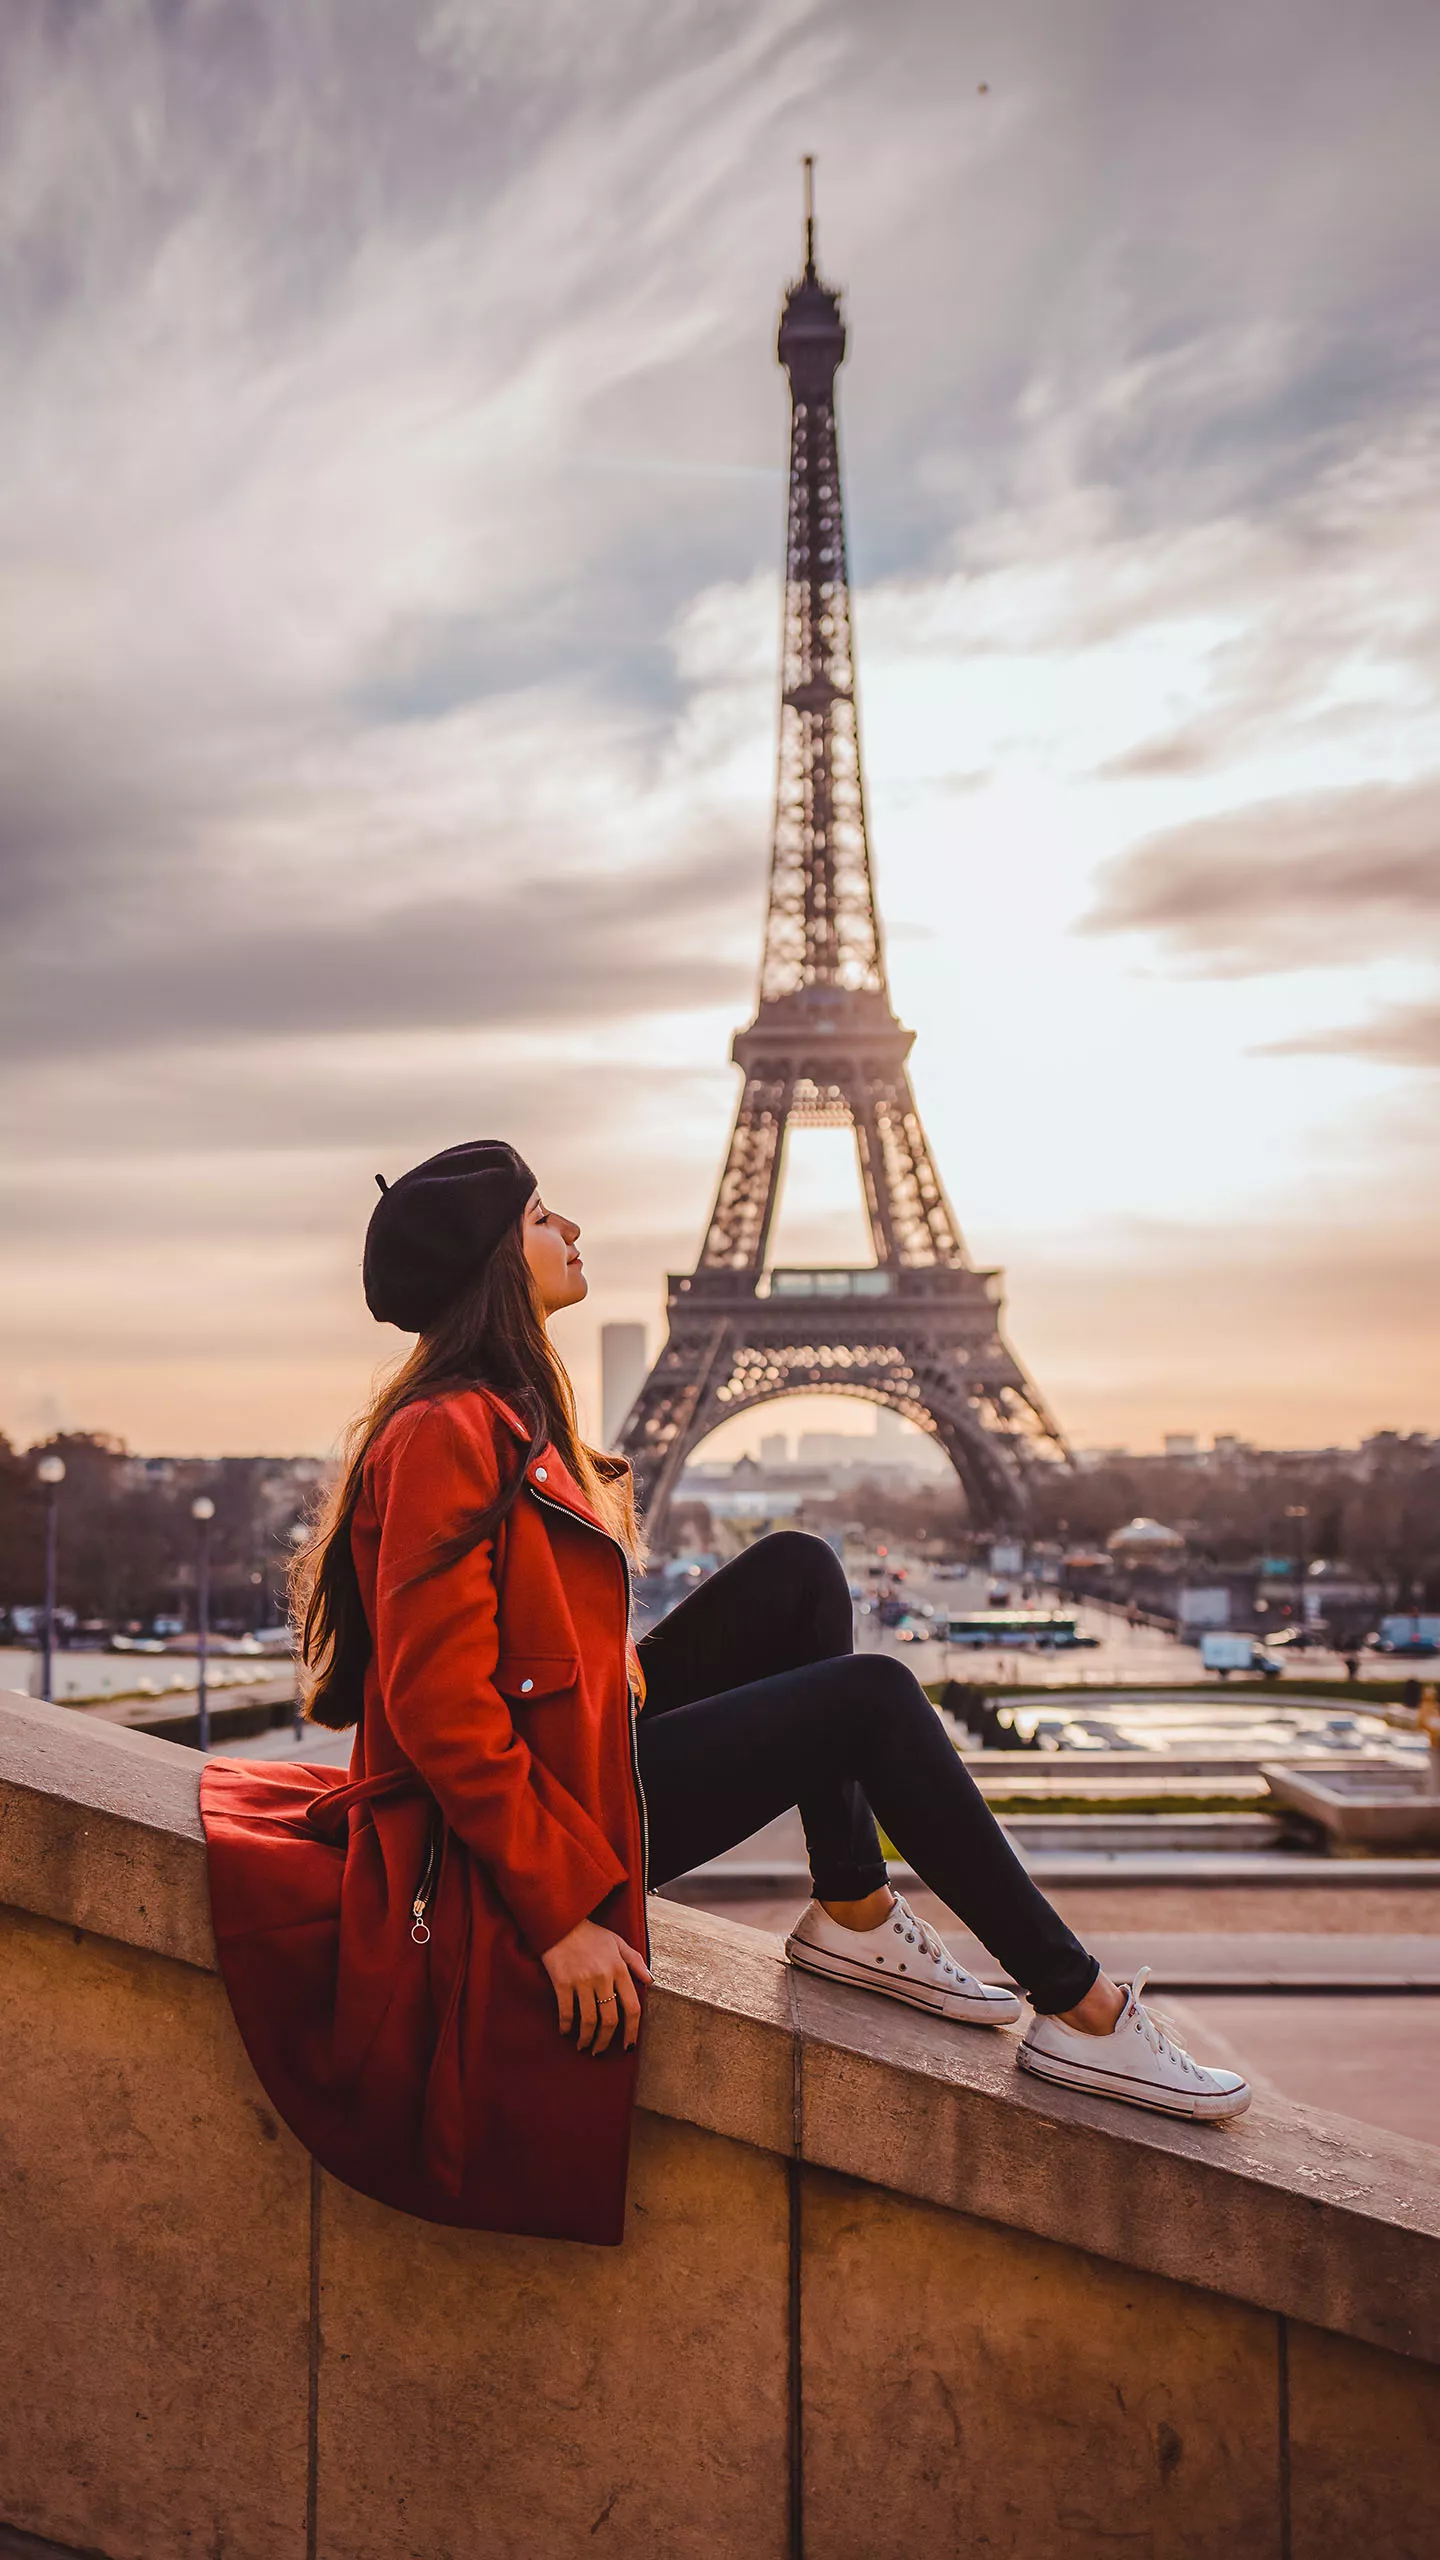 thumb for Girl In Paris Near Eiffel Tower Wallpaper